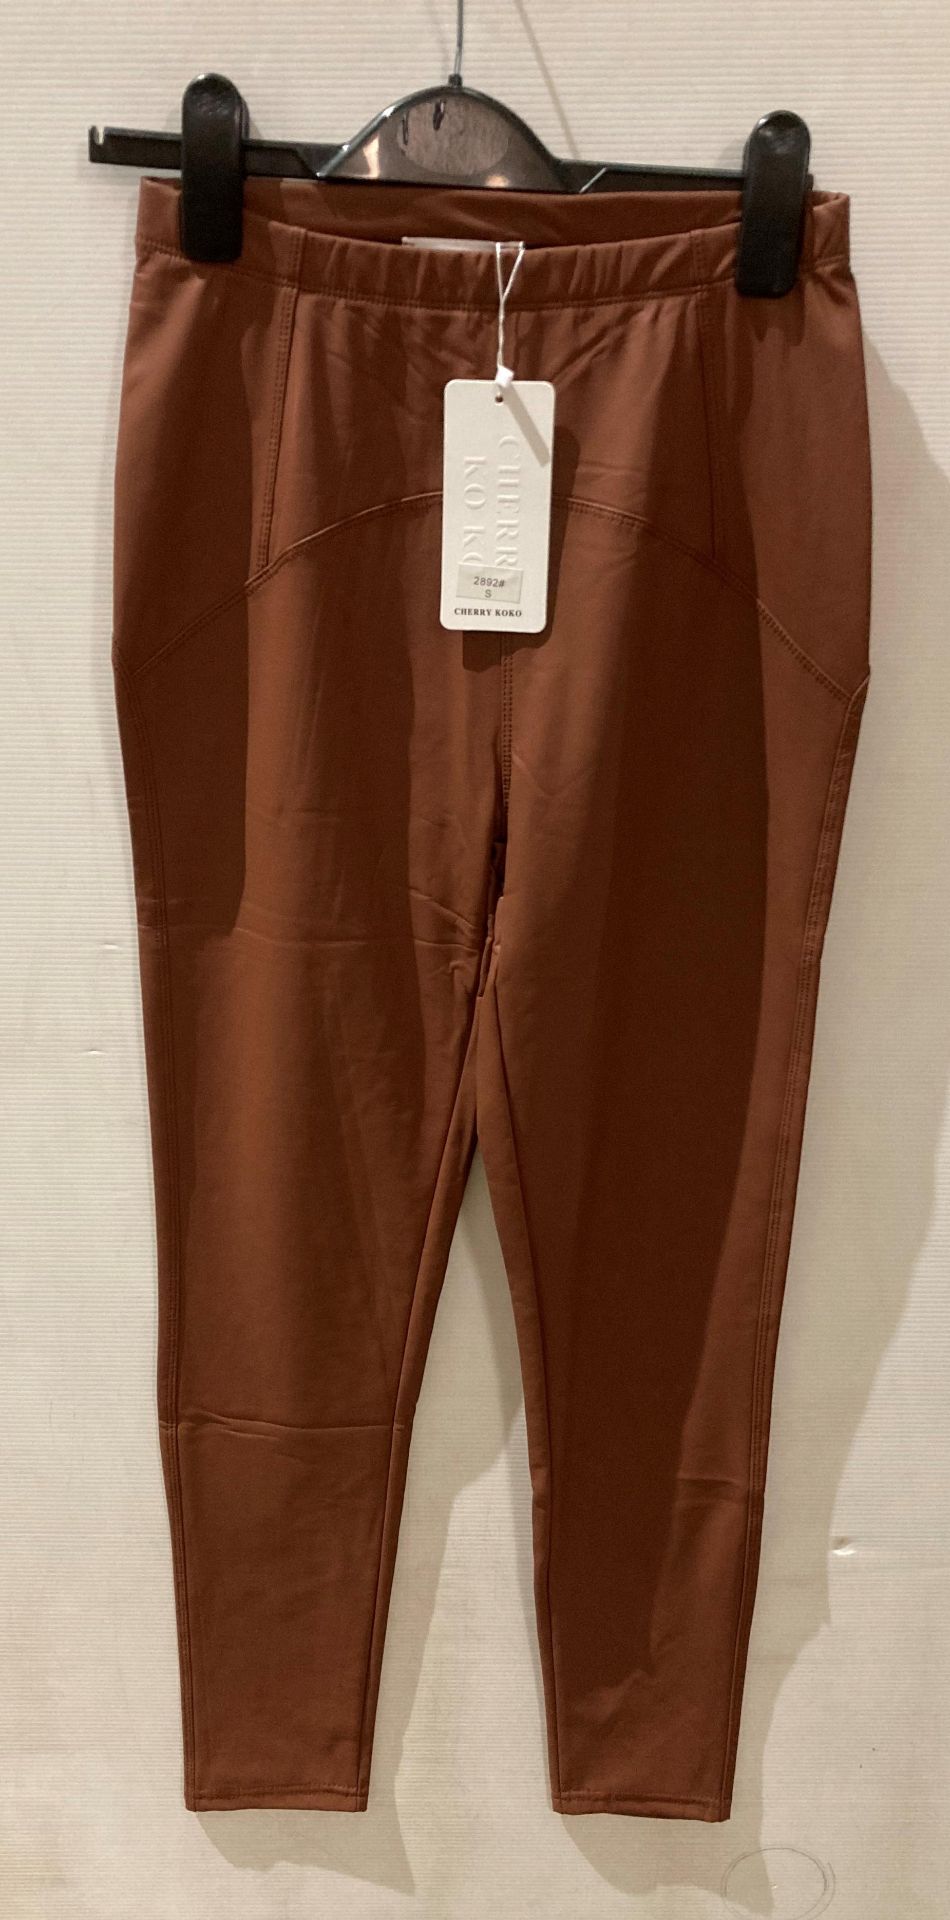 13 x Cherry KoKo brown pleather finish leggings/trousers - sizes S, M,